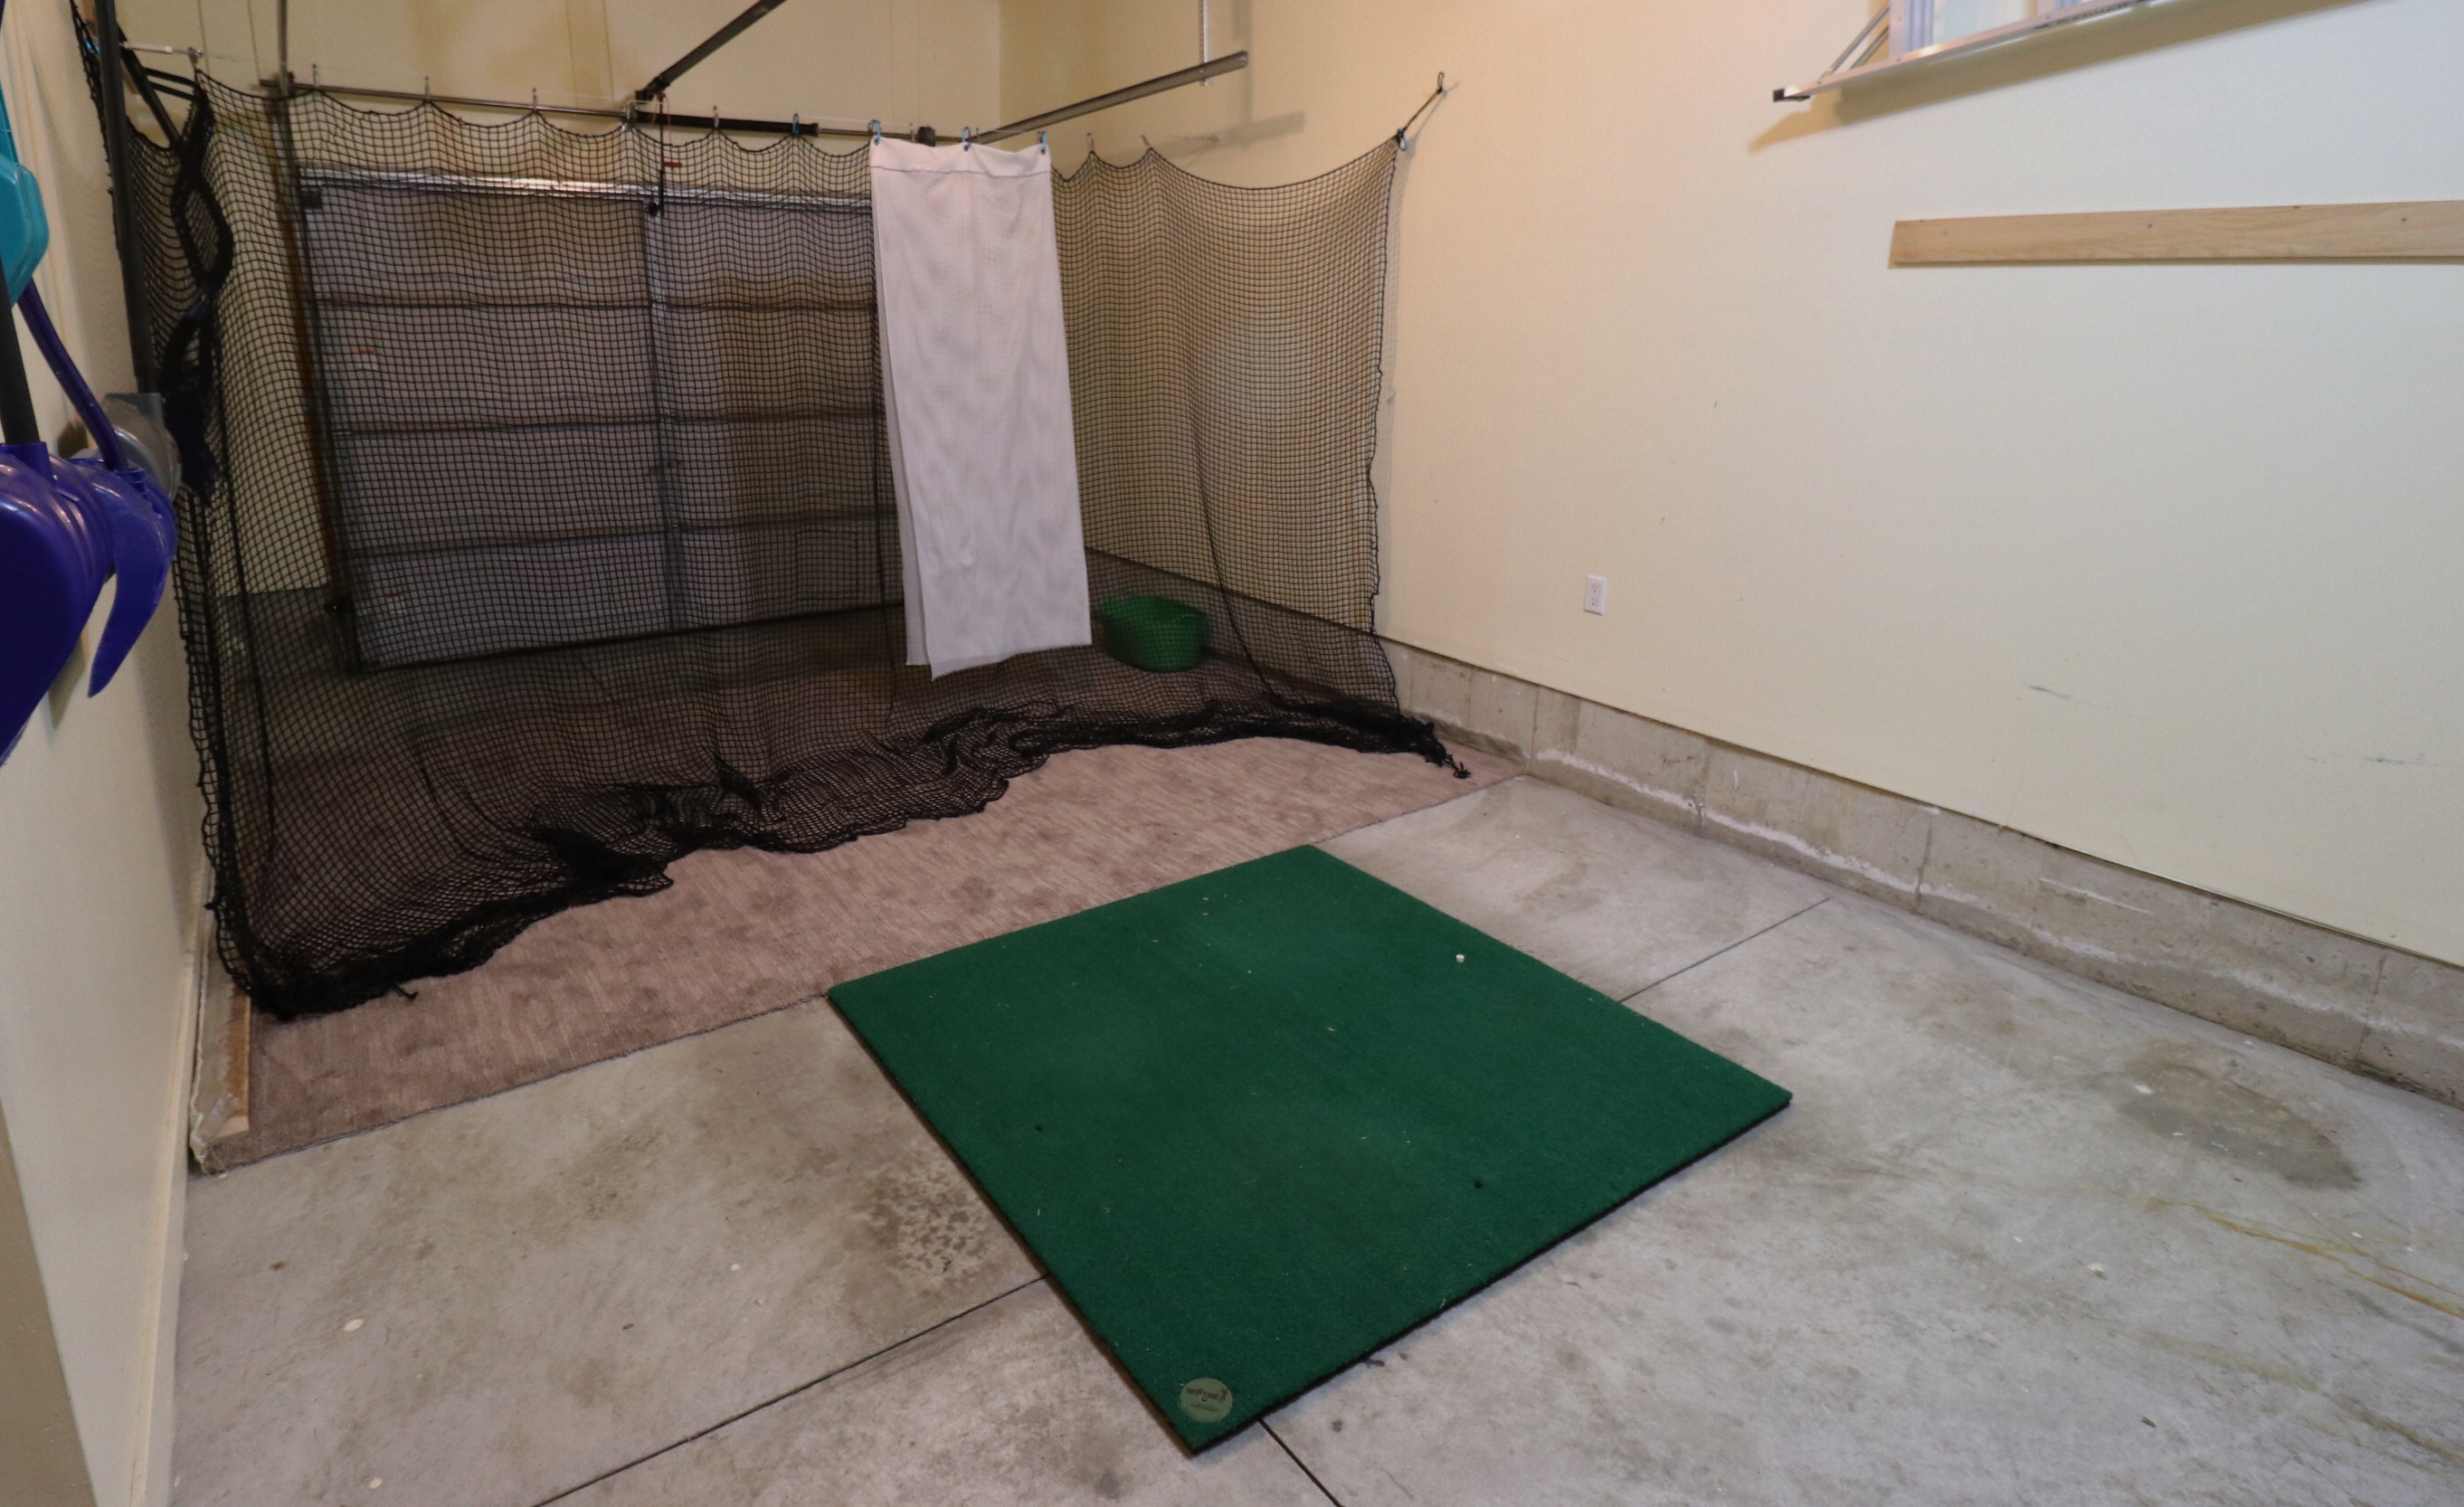 Building a home hitting net and simulator – GolfWRX